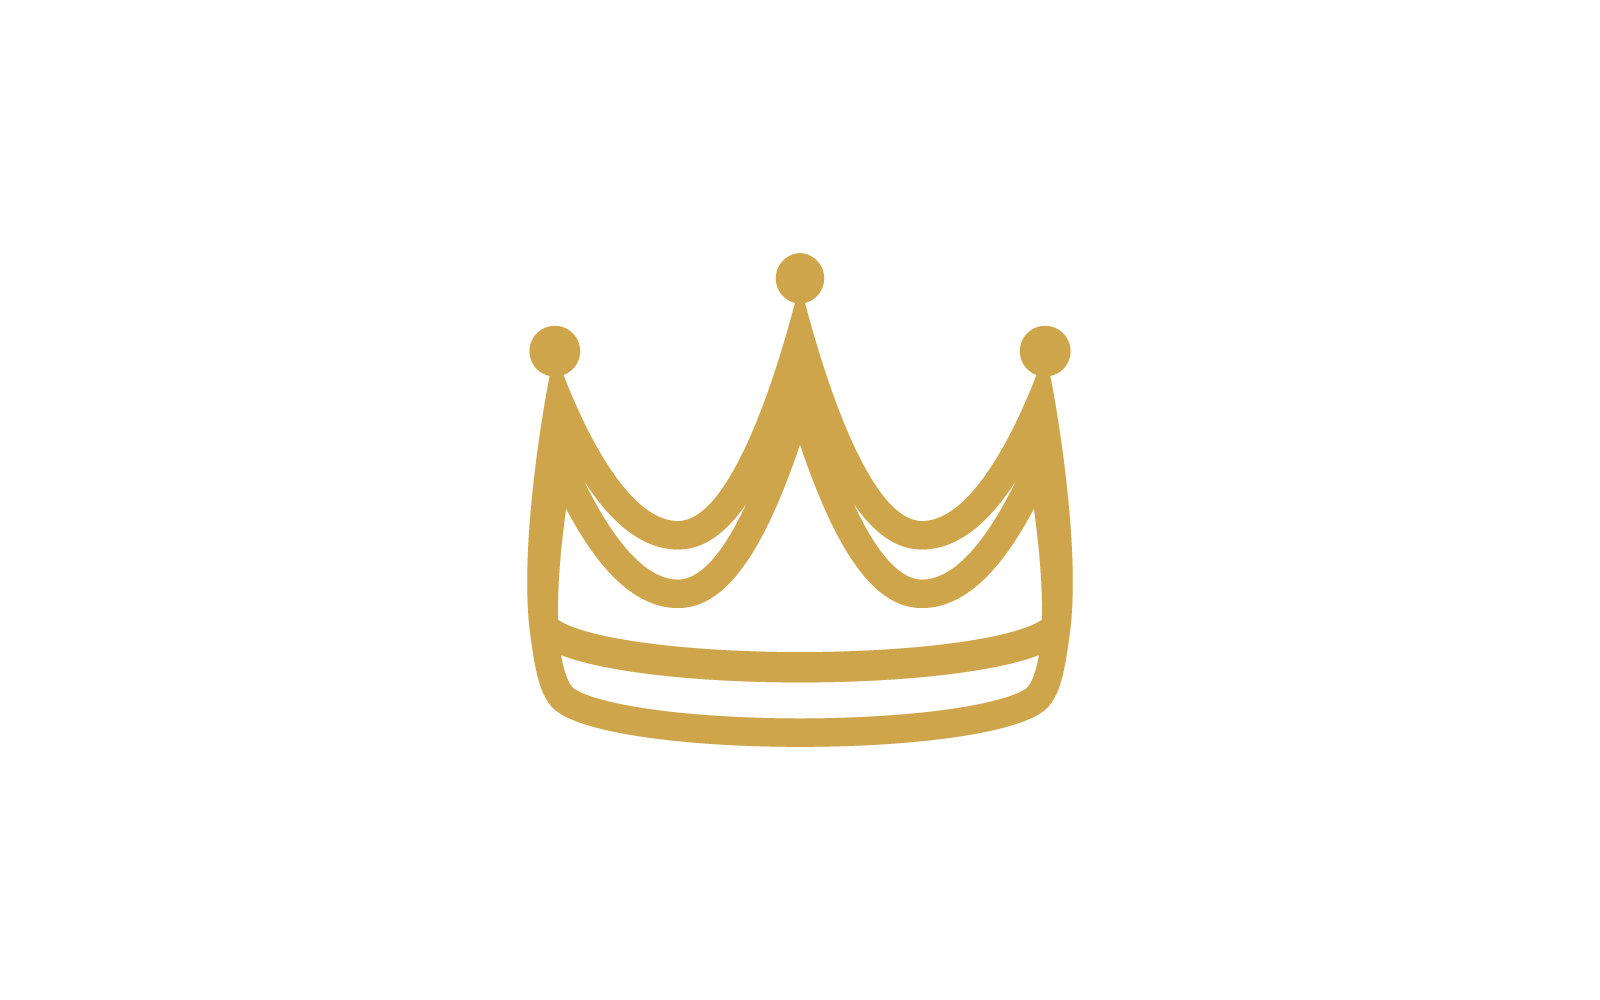 Crown illustration design vector template